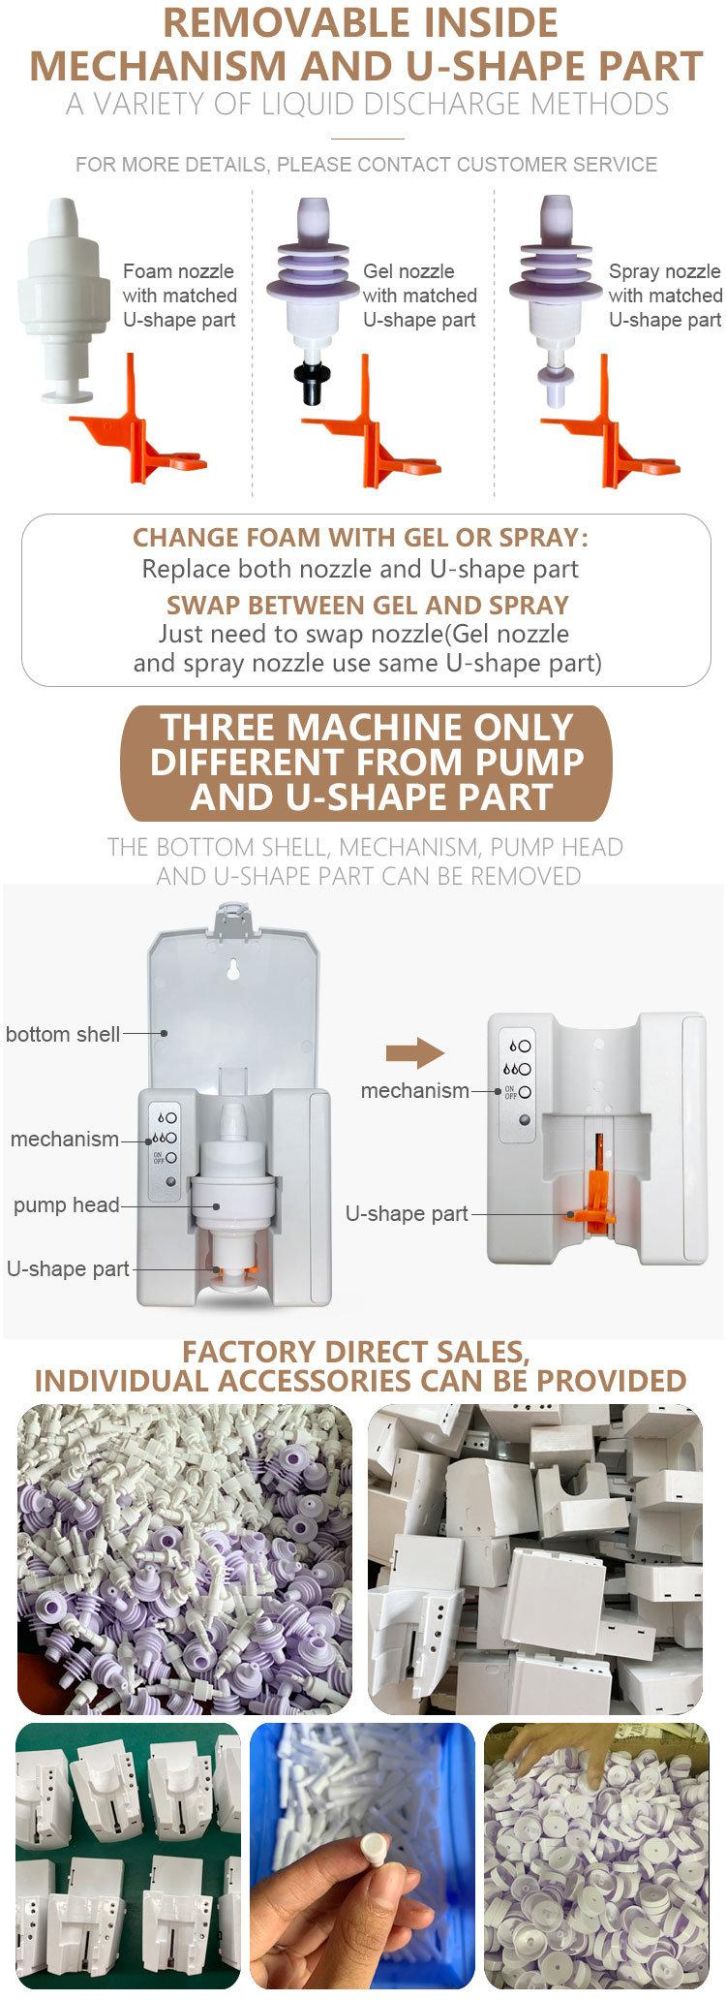 Cleaning Machine 1000ml Foam Liquid Hand Sanitizer Dispenser